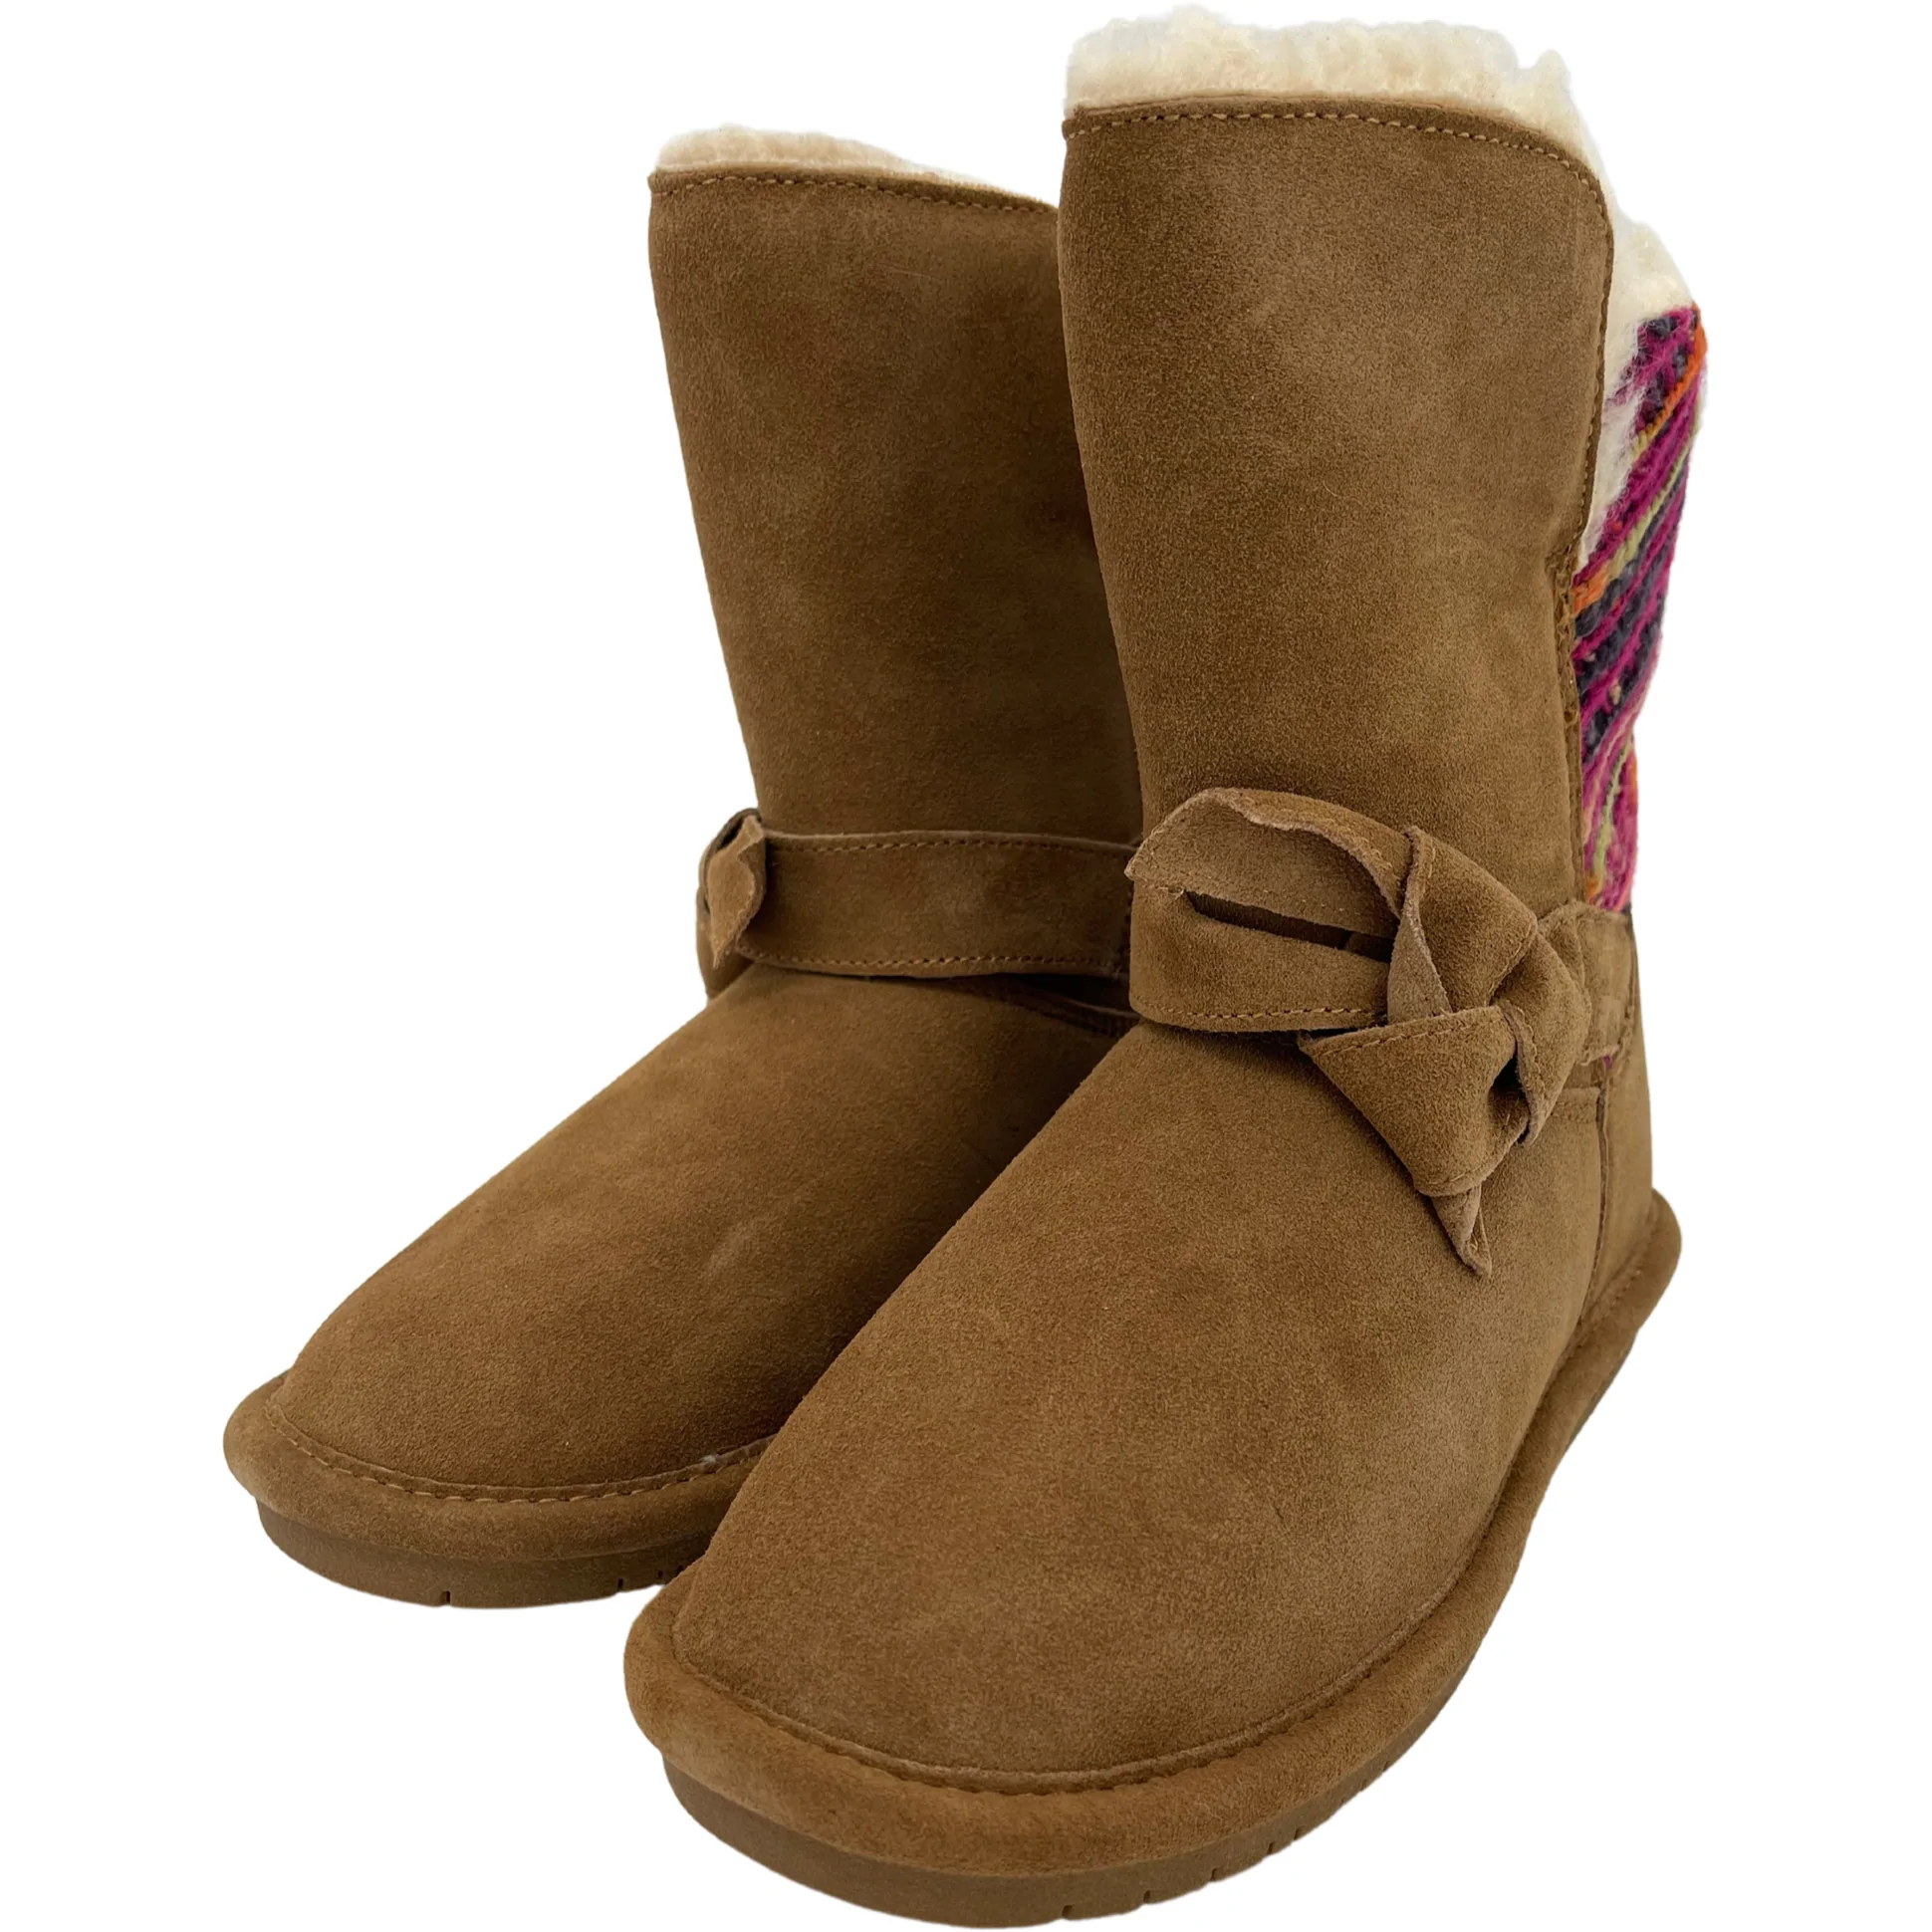 BearPaw Women's Winter Boot / Geneva / Short Boot / Tan with Multicolour Accent / Size 6